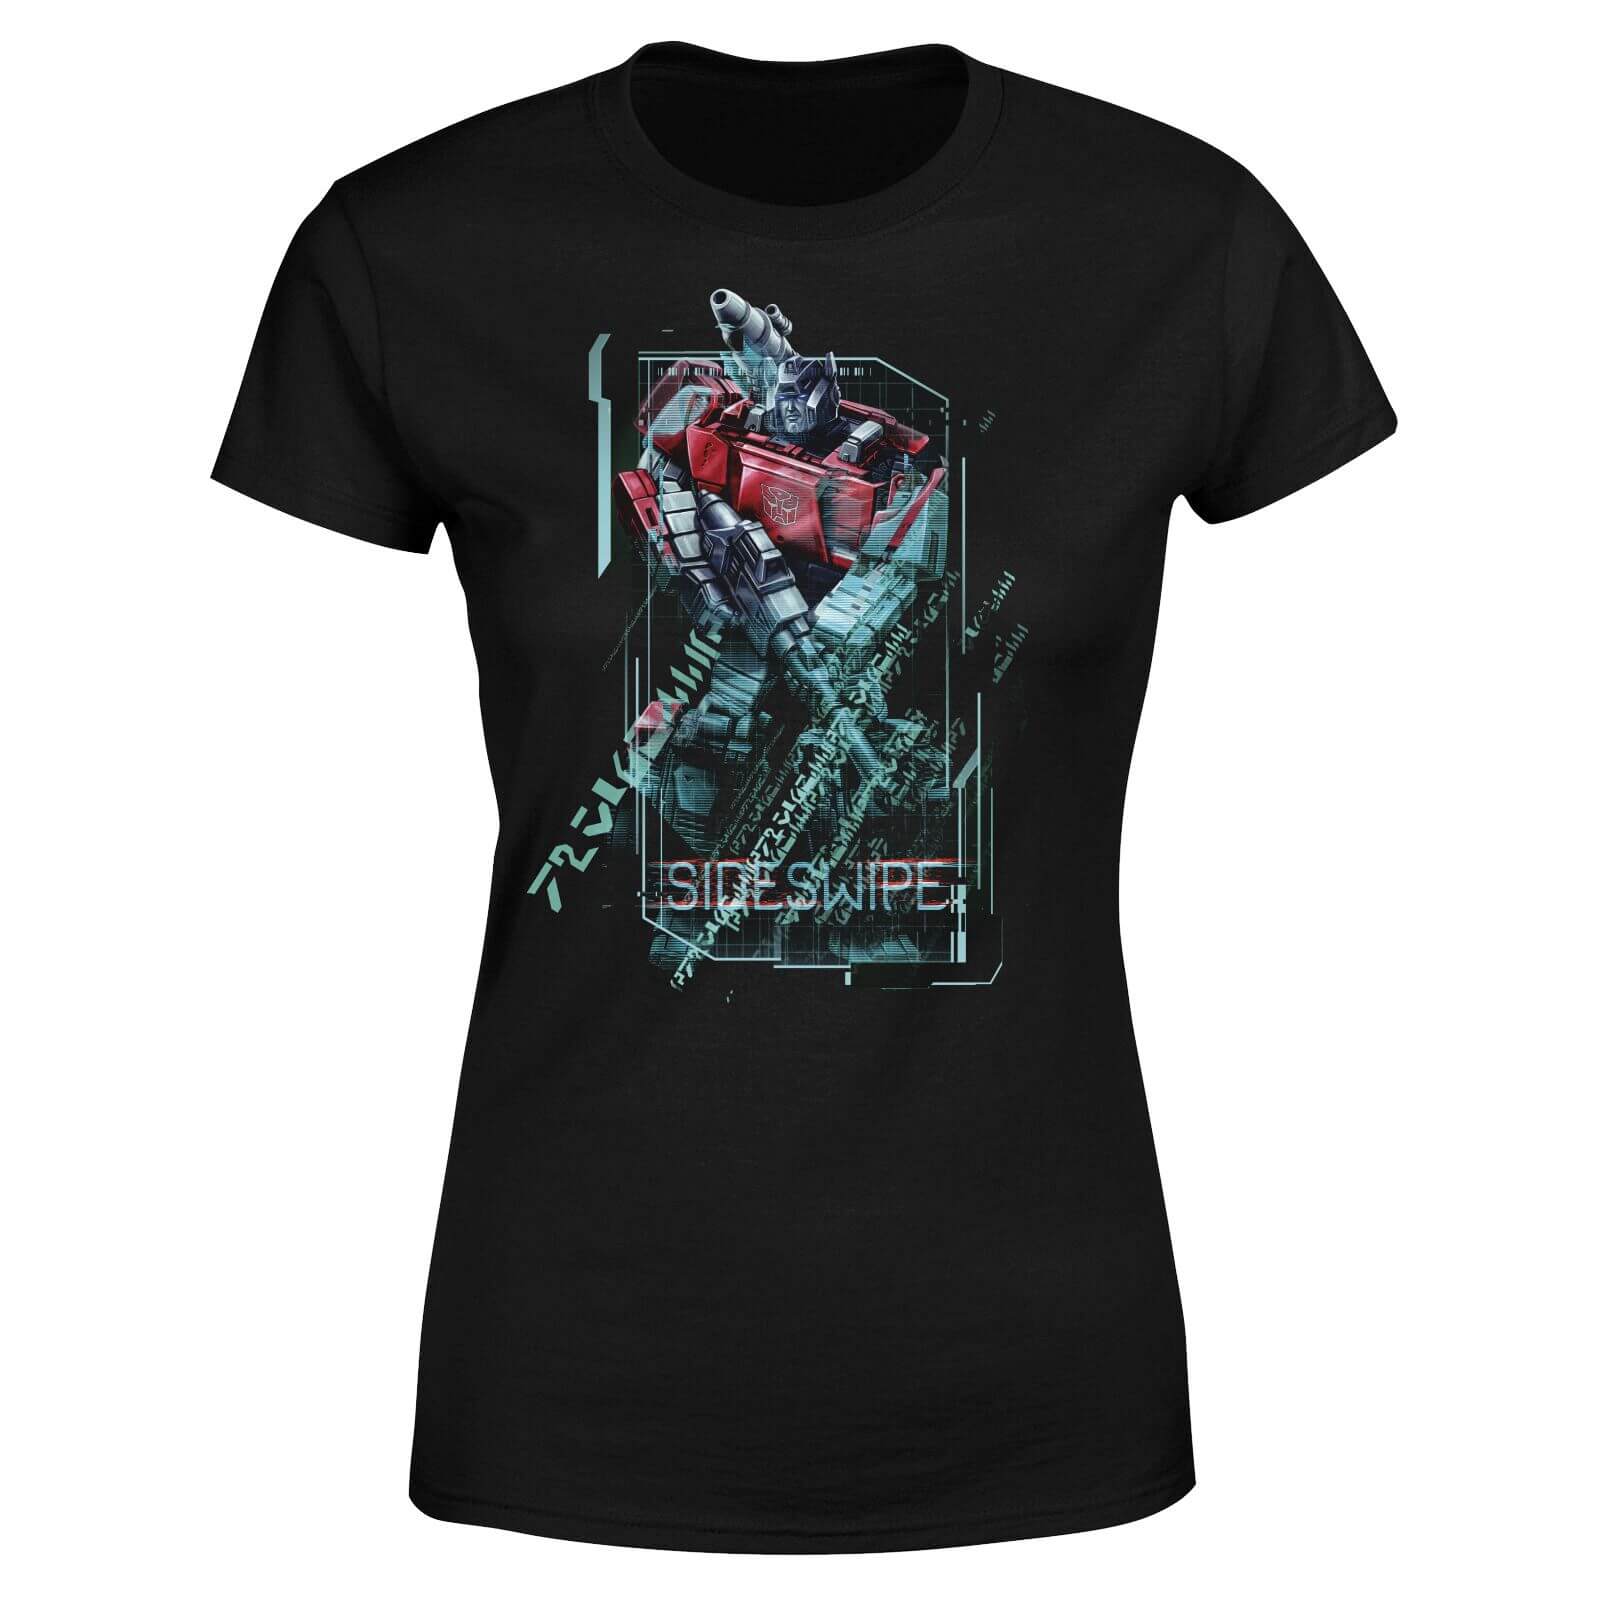 Transformers Sideswipe Tech Women's T-Shirt - Black - S - Black